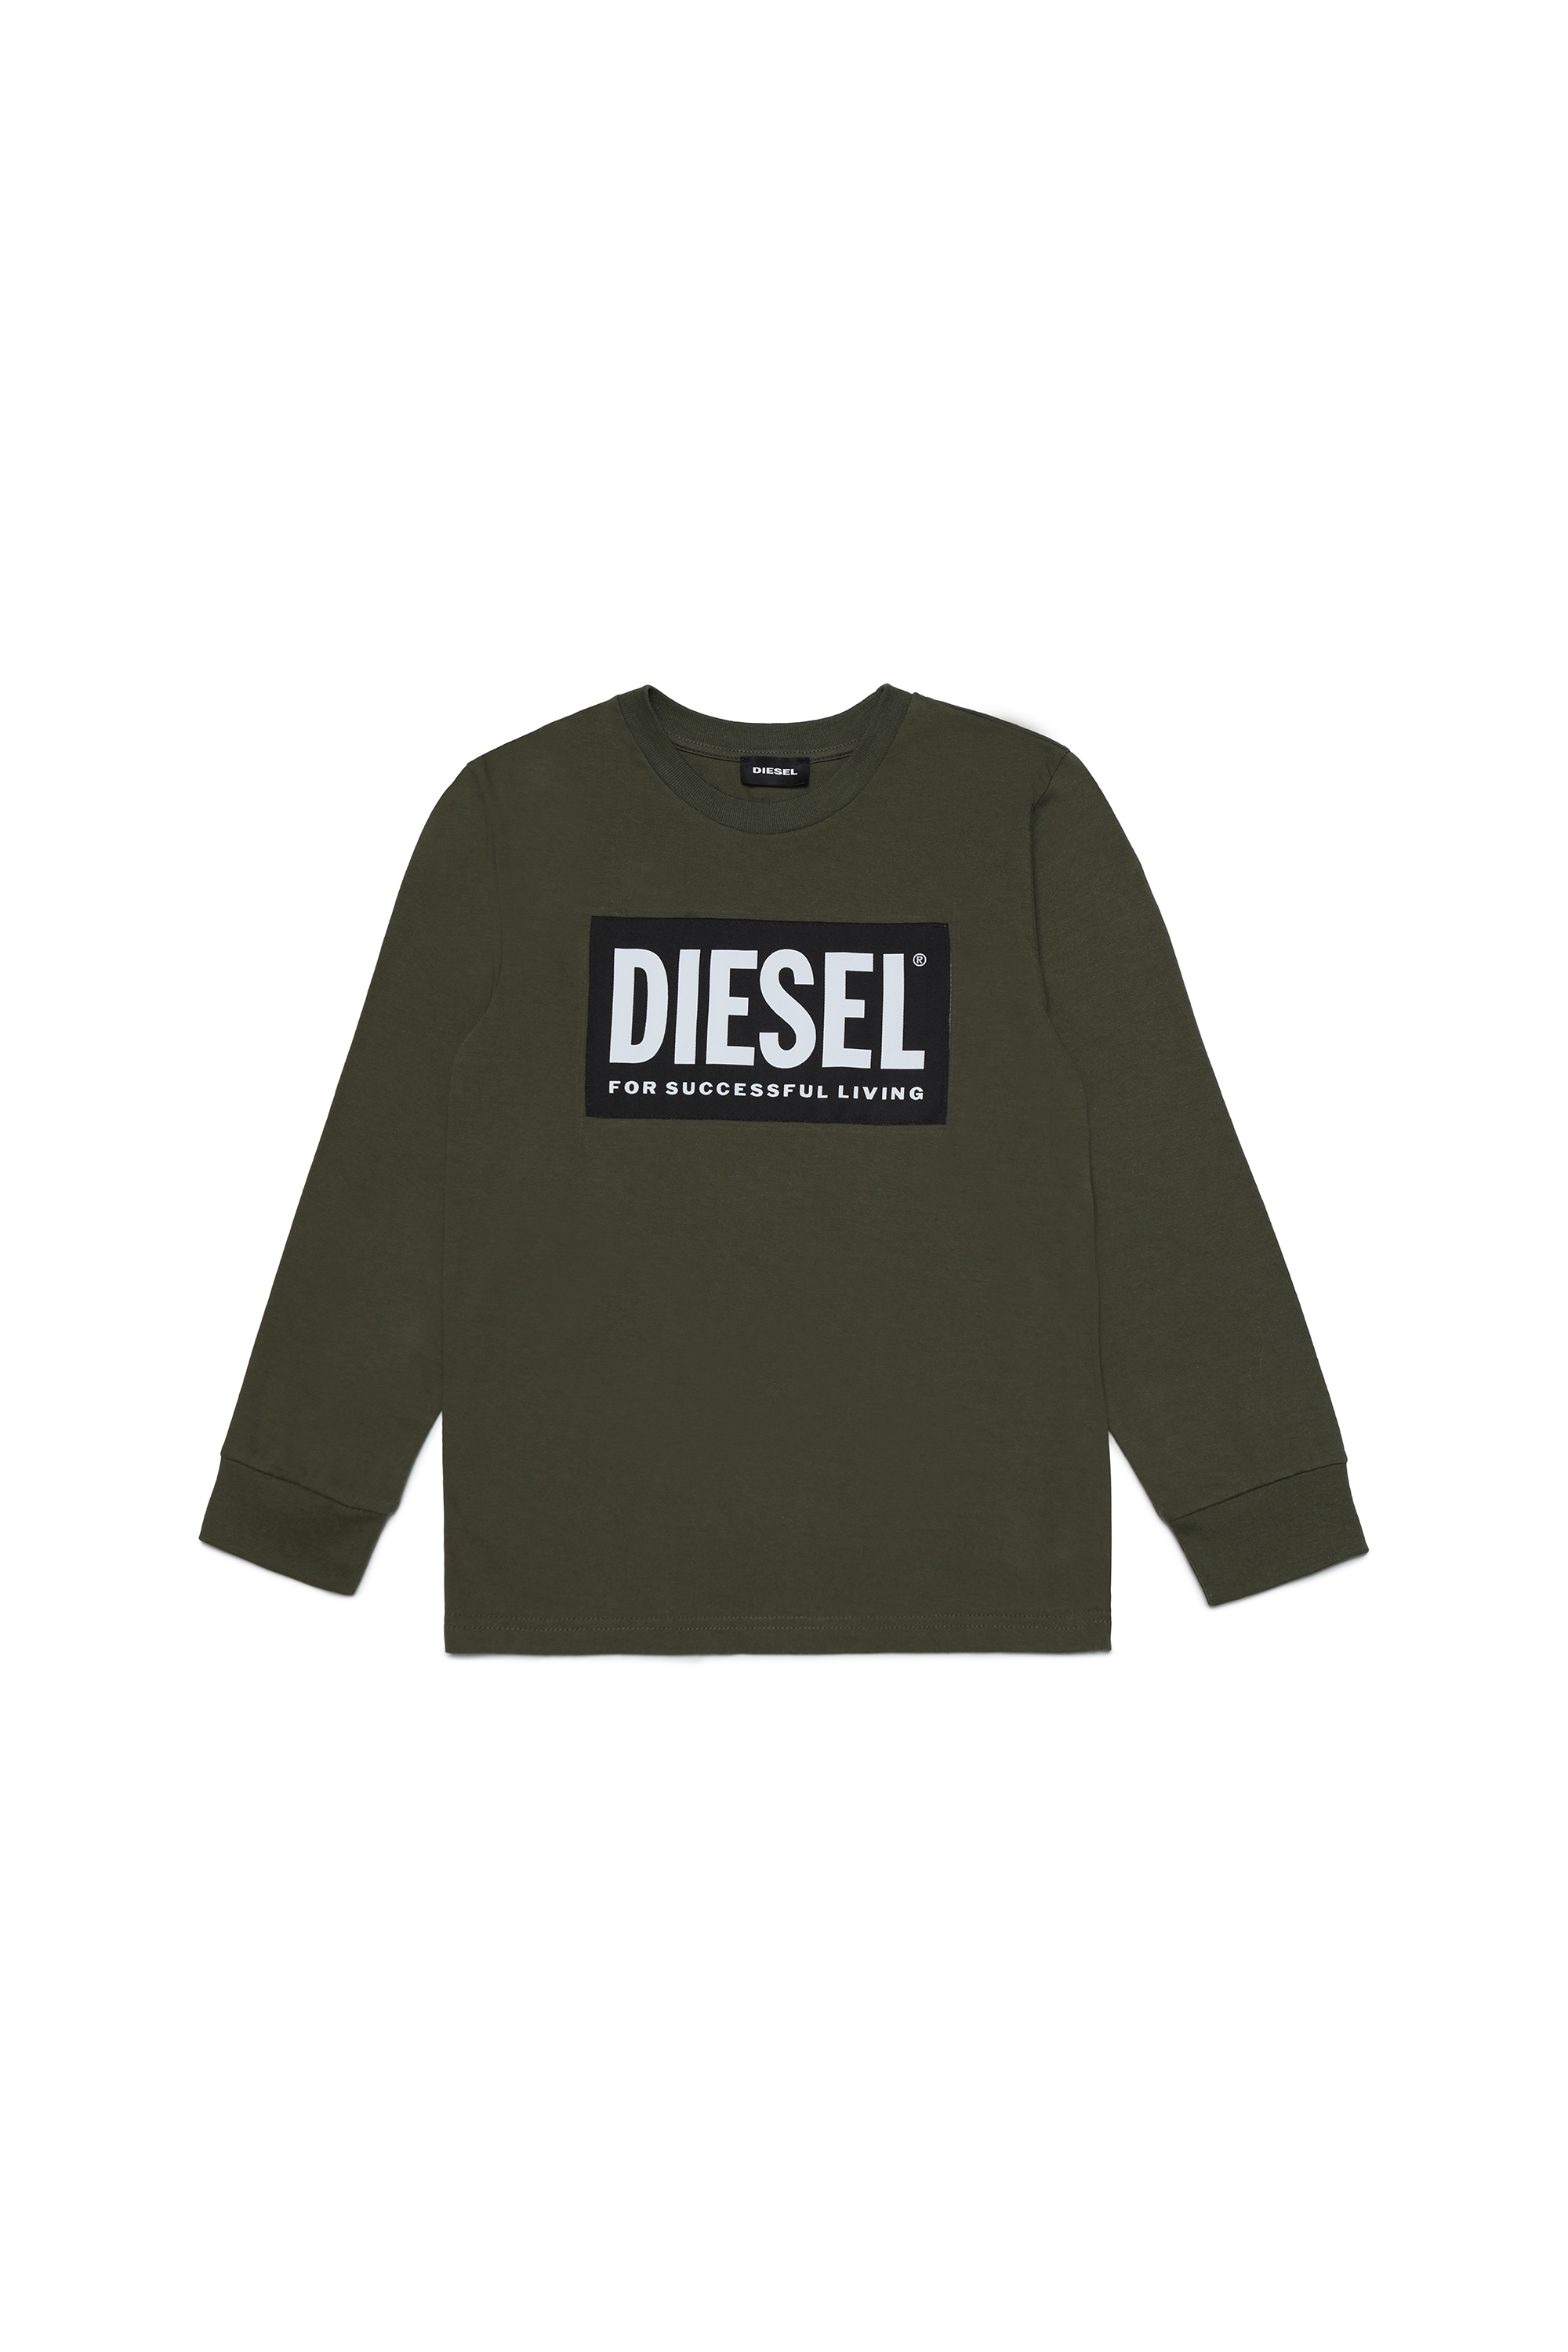 Diesel - TUSTY ML, Military Green - Image 1